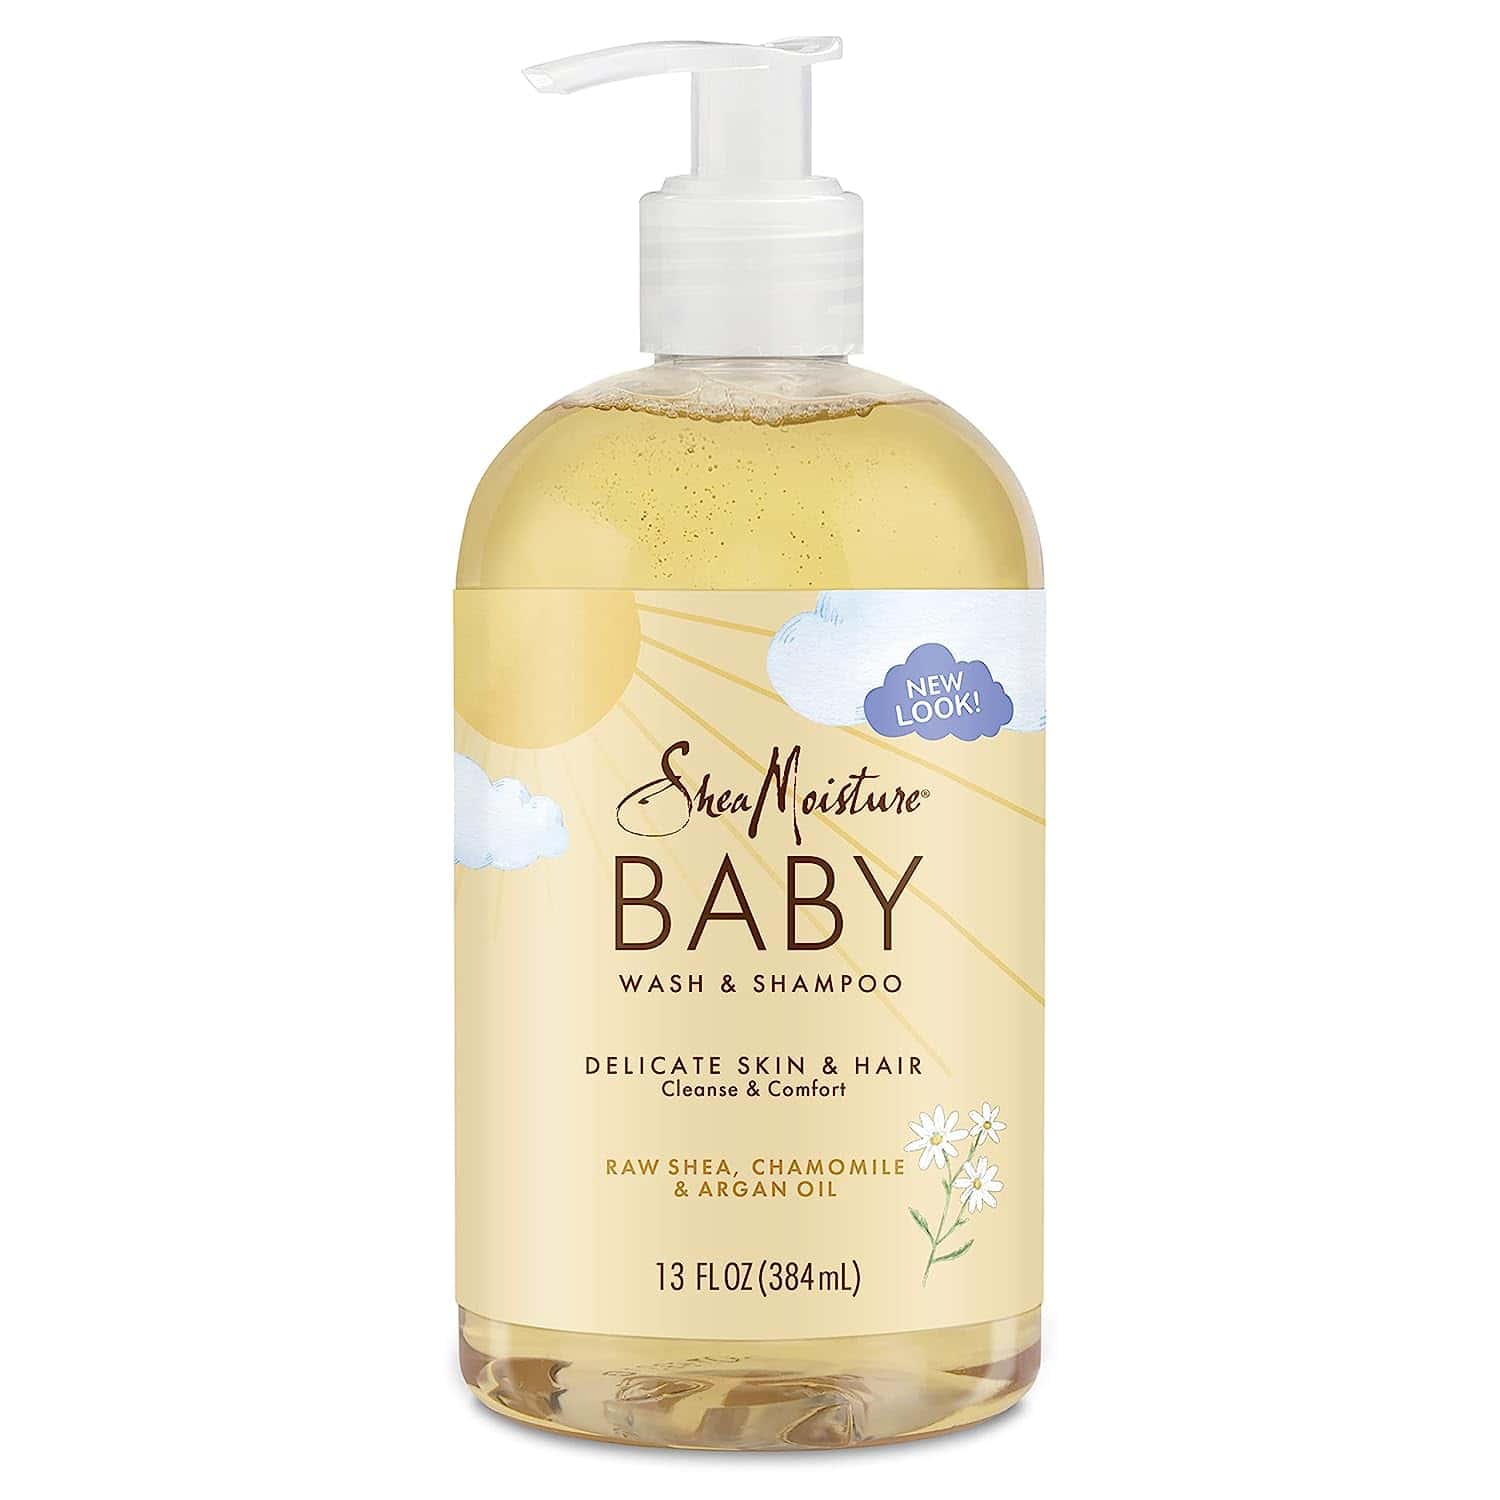 SheaMoisture Baby Wash & Shampoo for All Skin Types